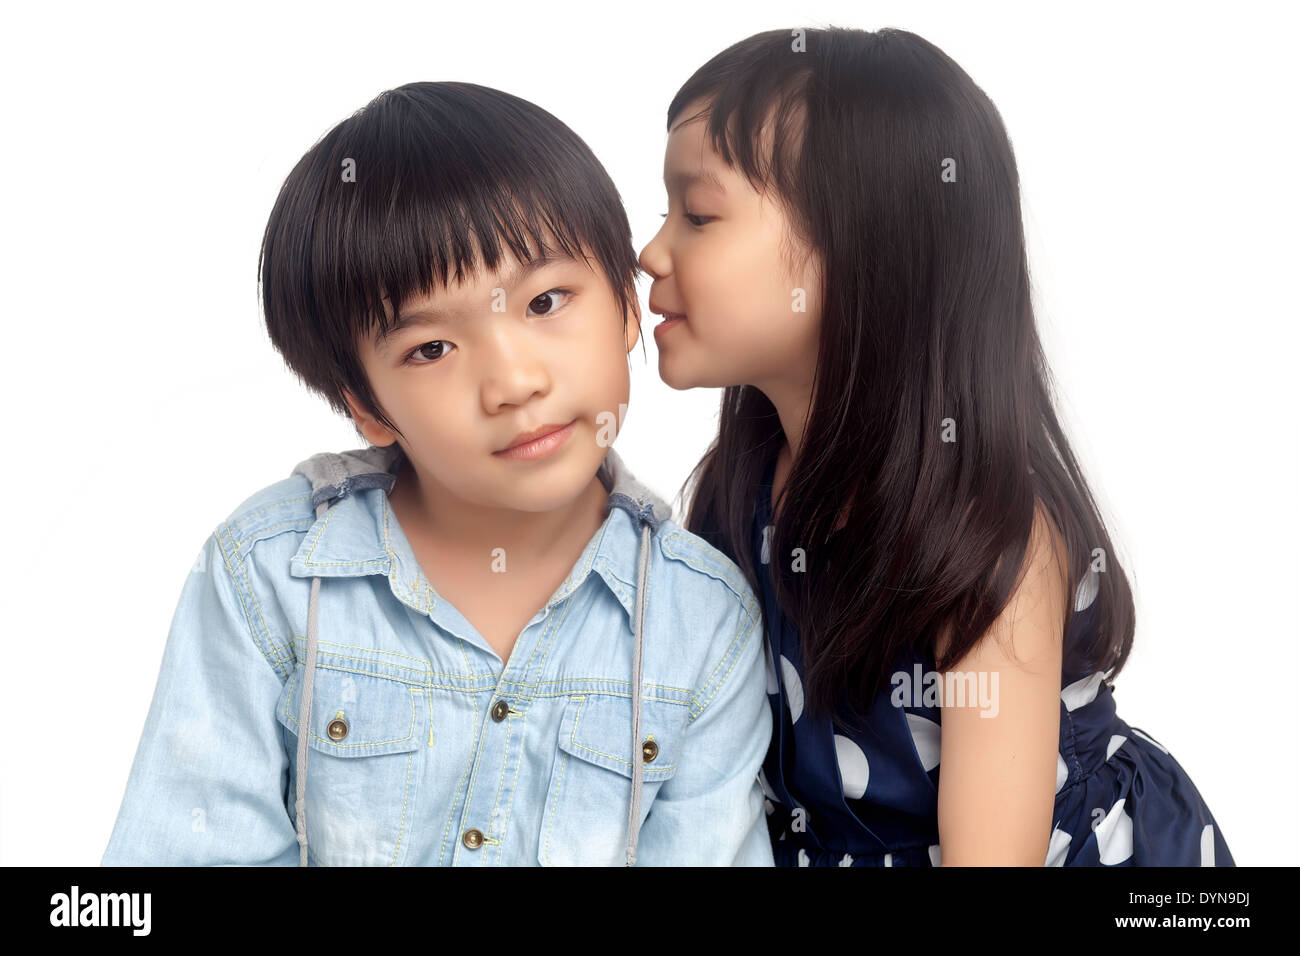 Kids sharing secret on white background Stock Photo